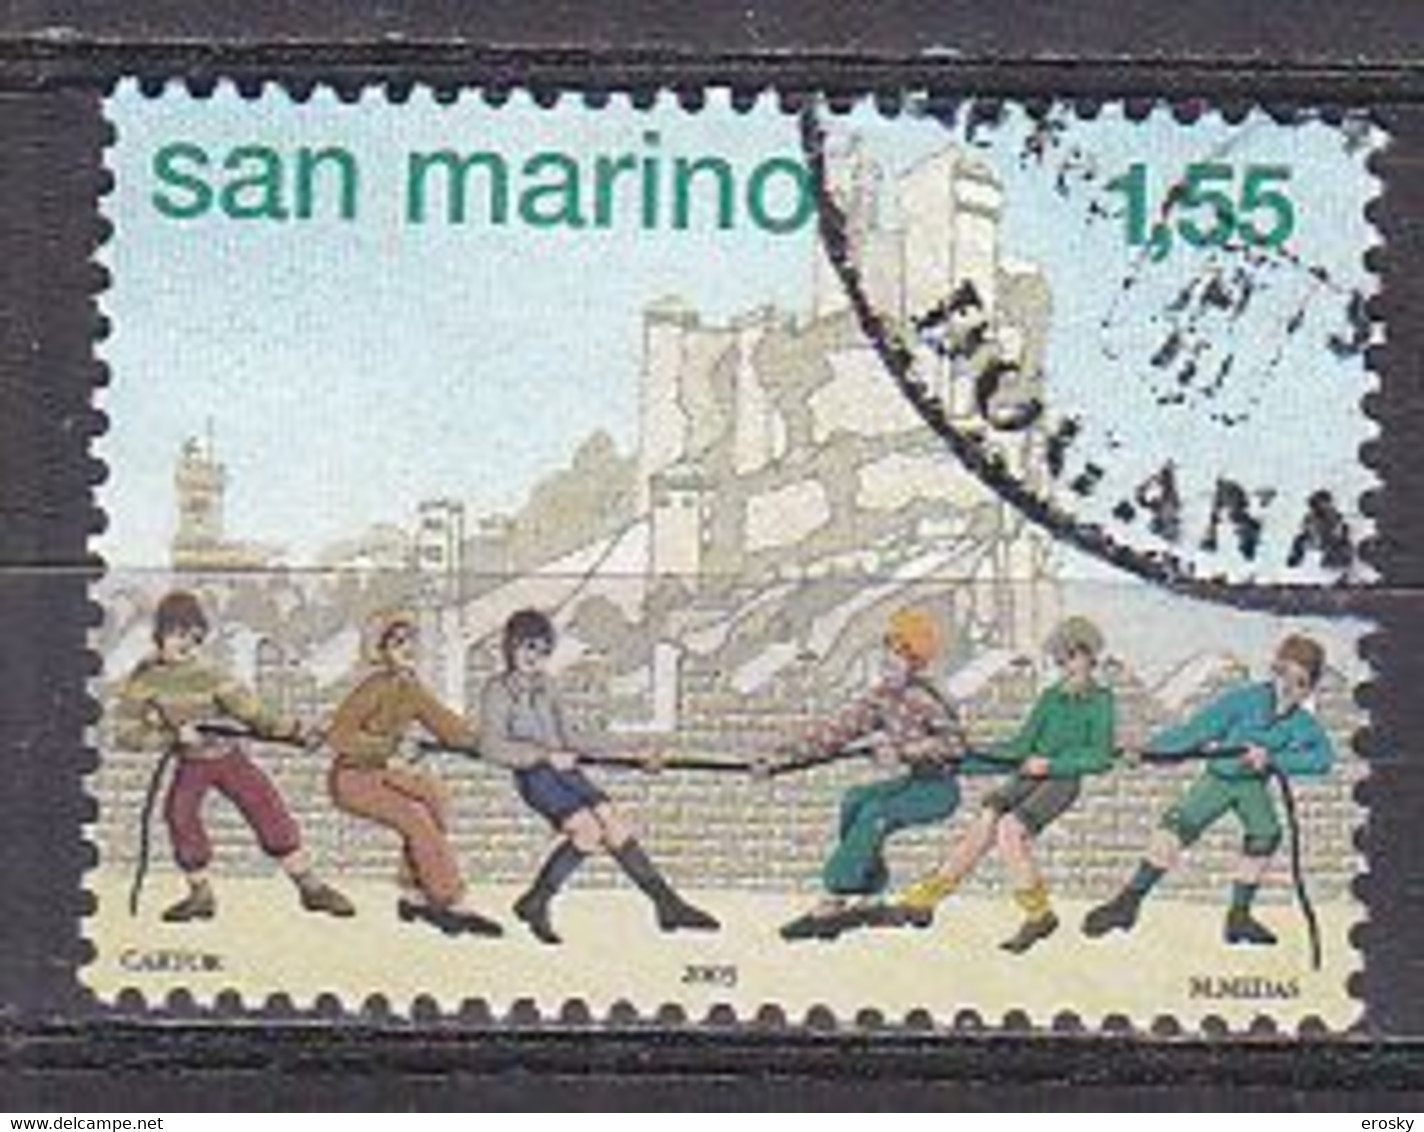 Y9006 - SAN MARINO Ss N°1953 - SAINT-MARIN Yv N°1911 - Usati